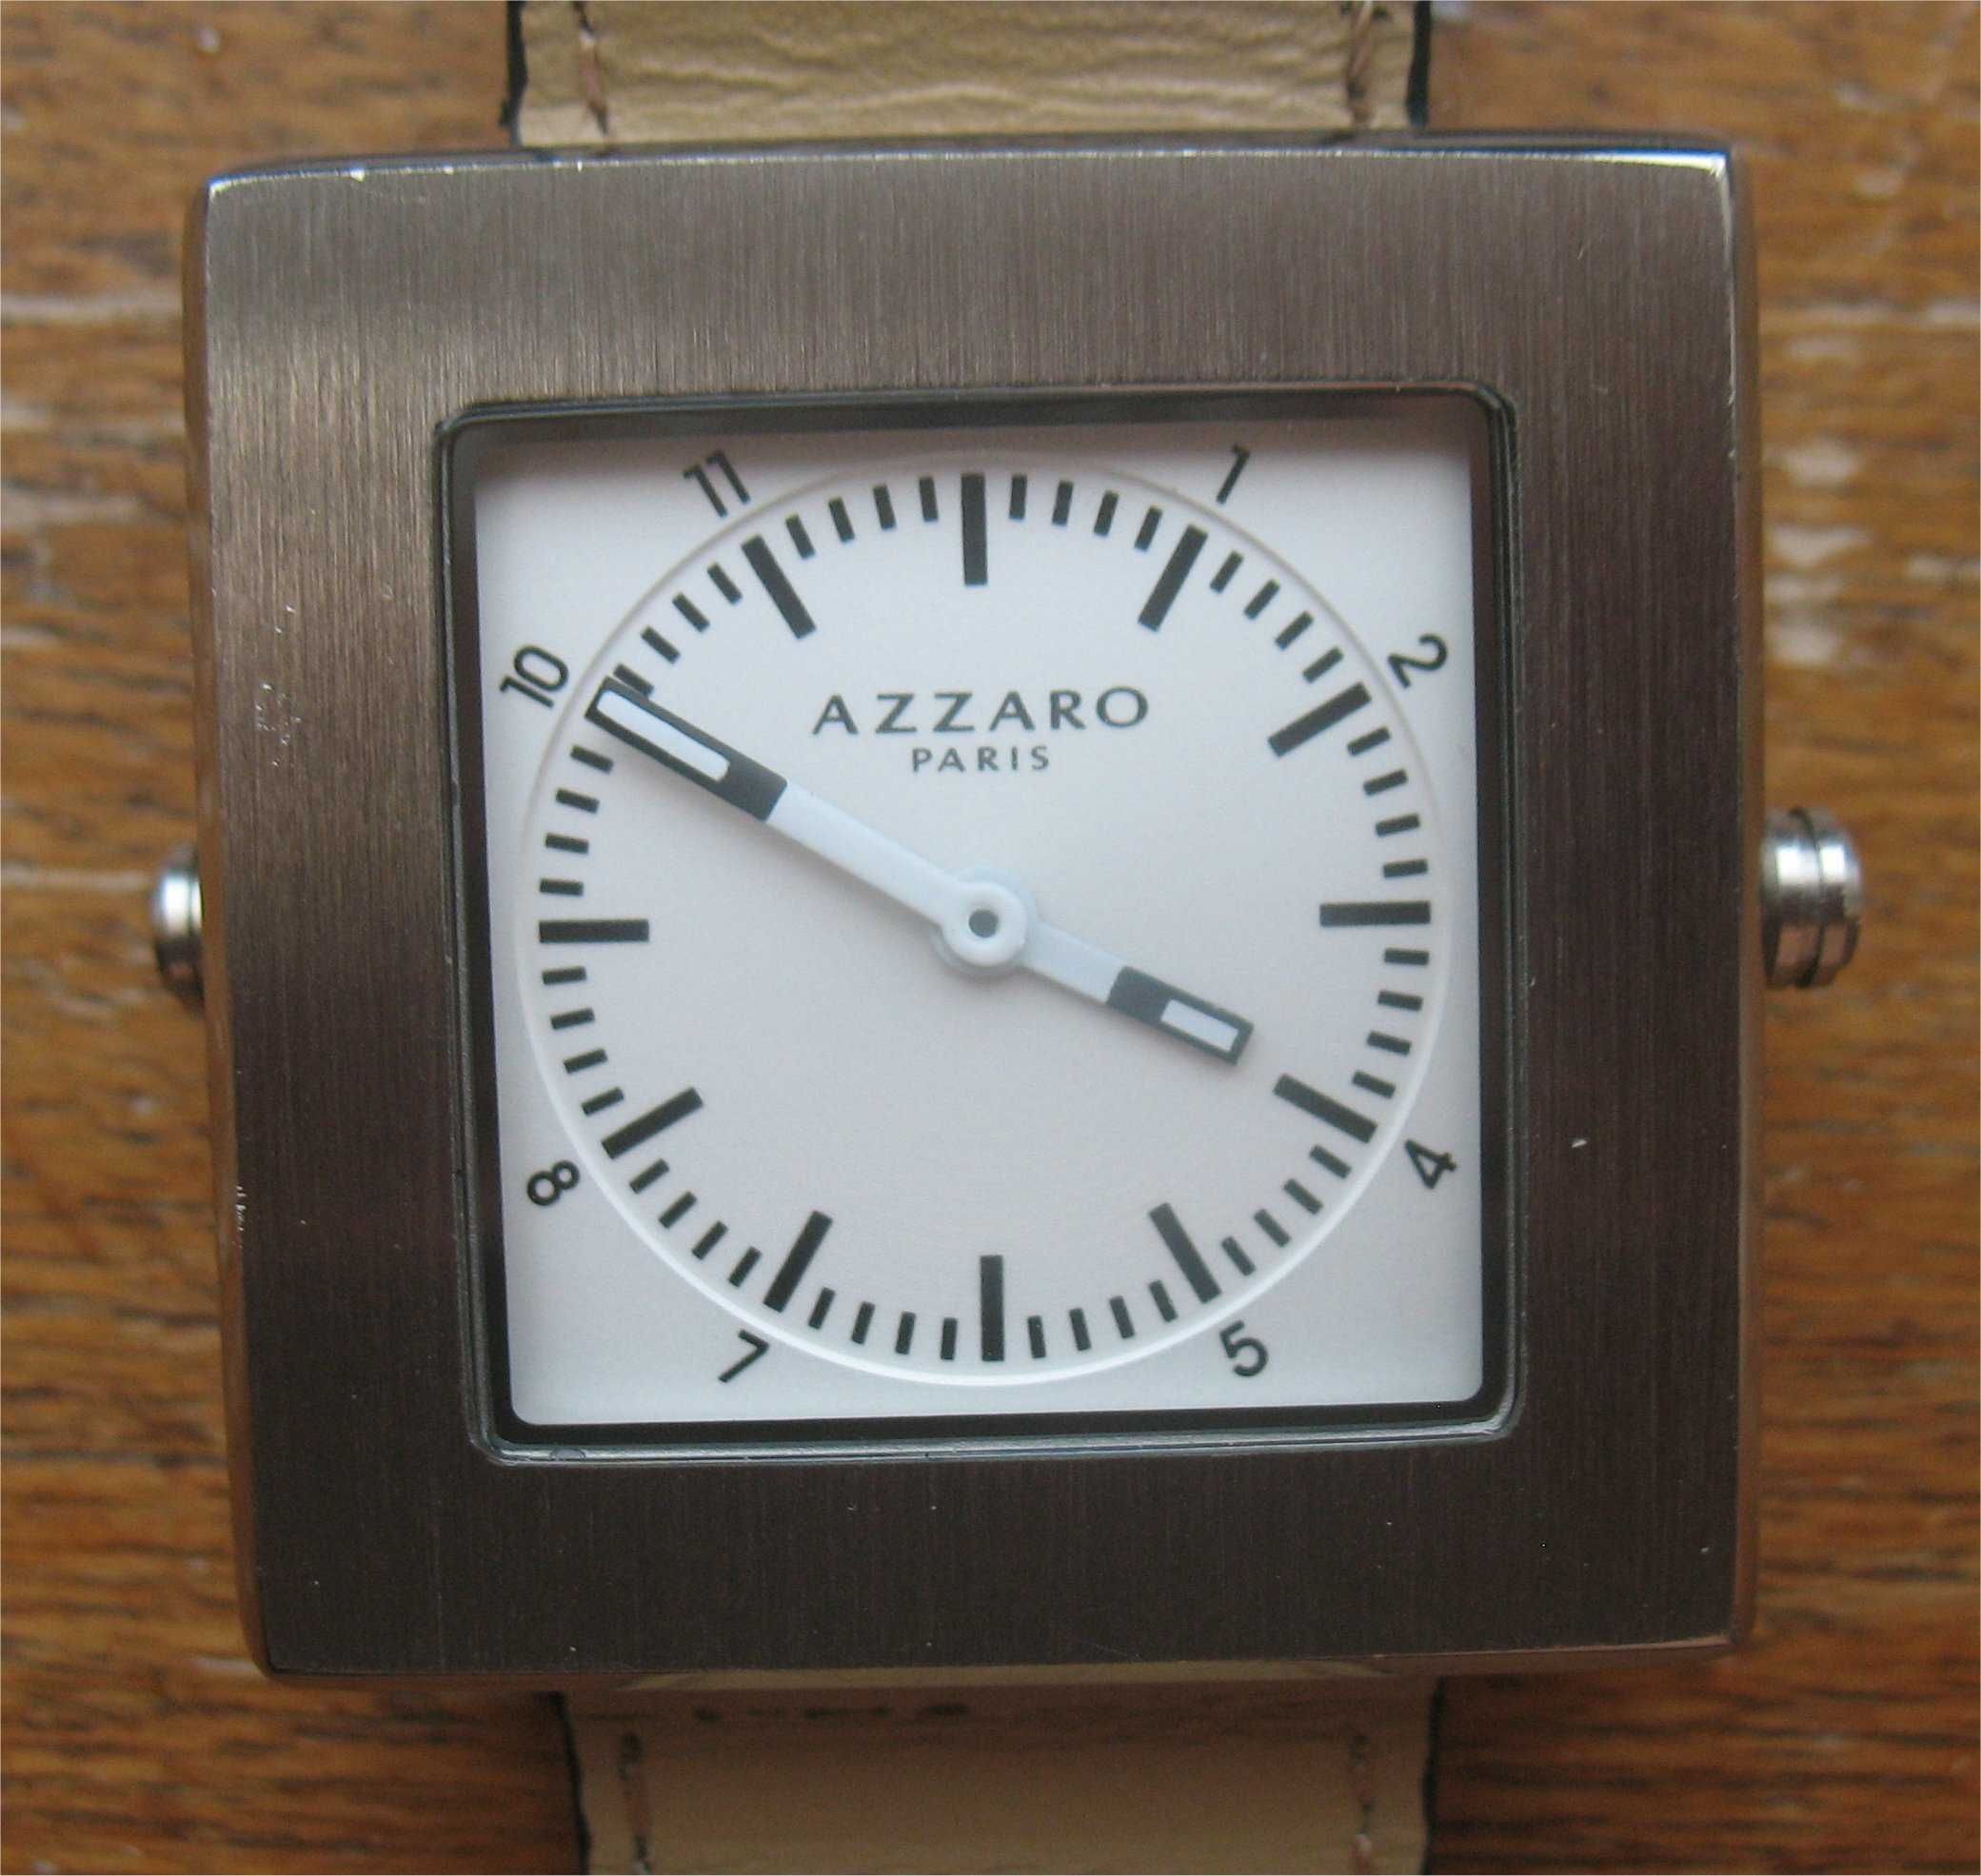 Azzaro Paris - Relógio Duplo